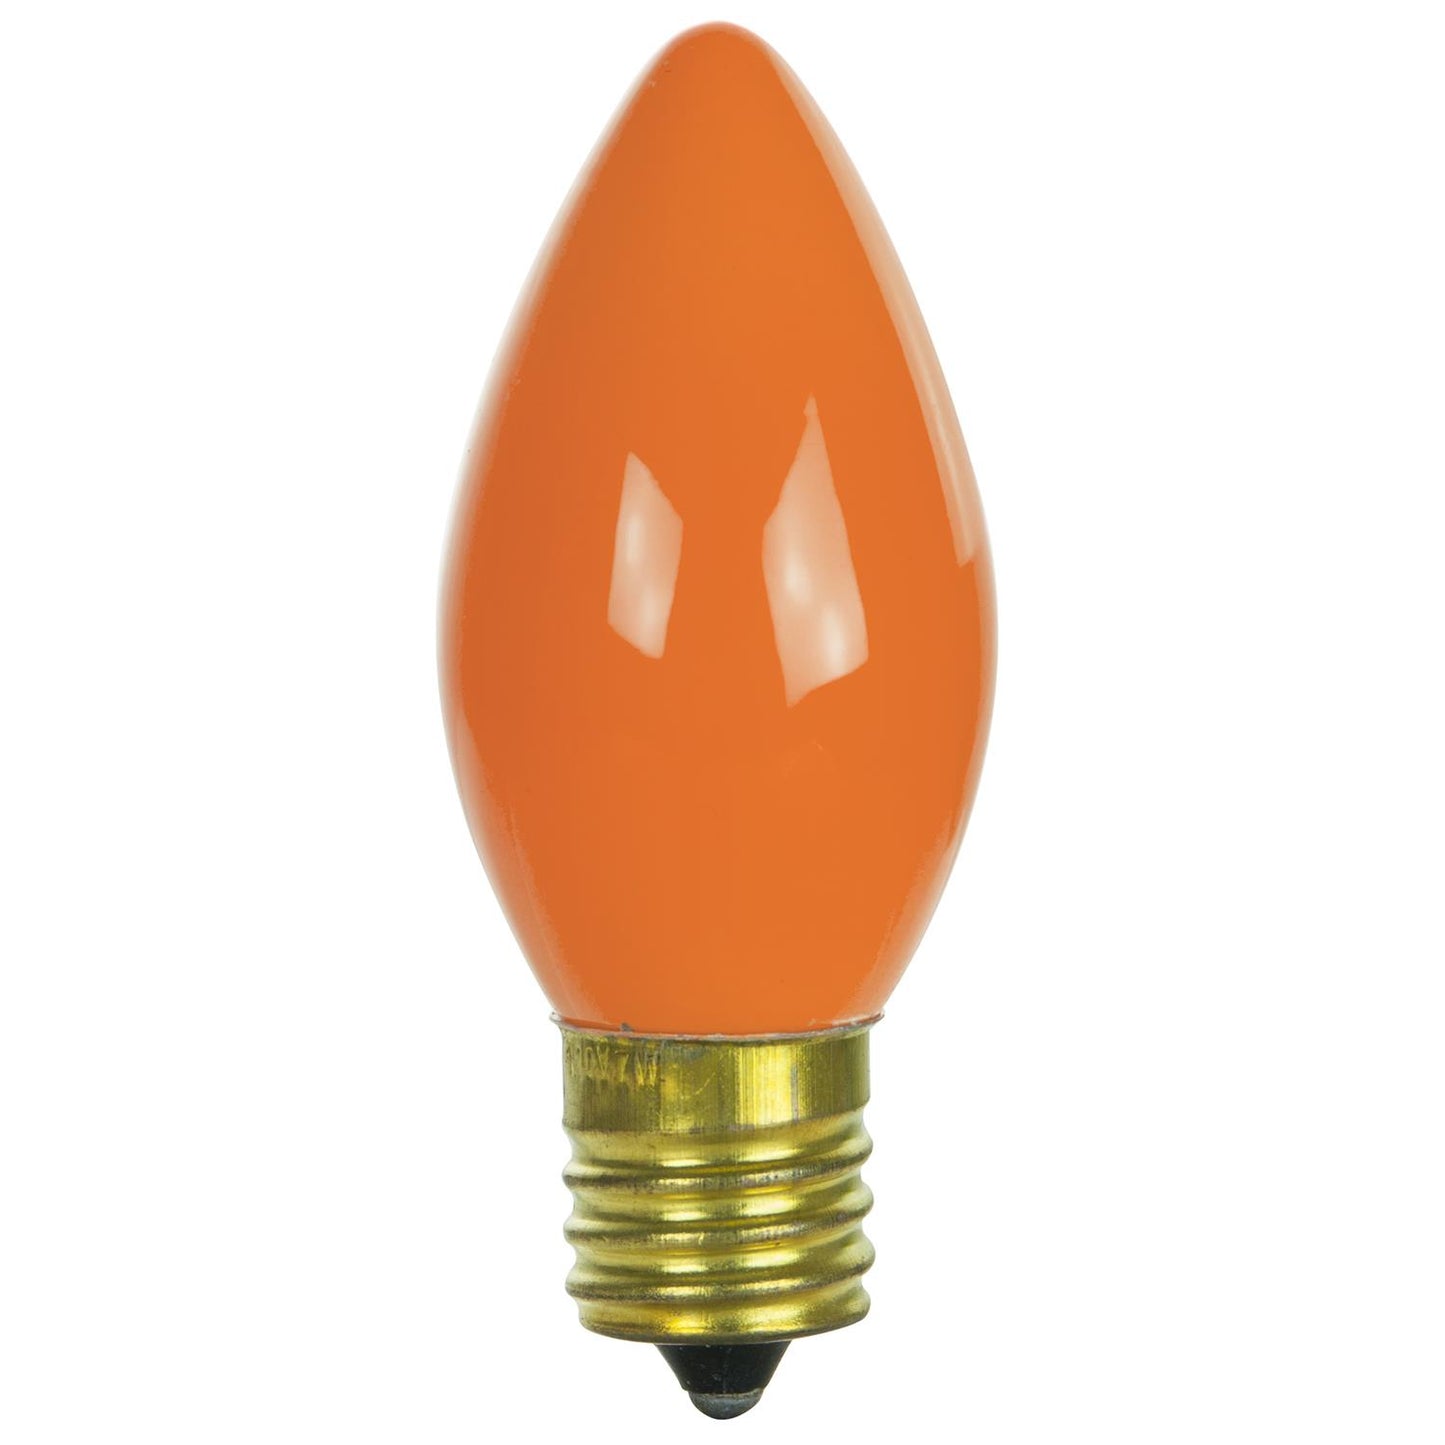 25 Pack Sunlite 7 Watt C9 Colored Night Light, Intermediate Base, Ceramic Orange